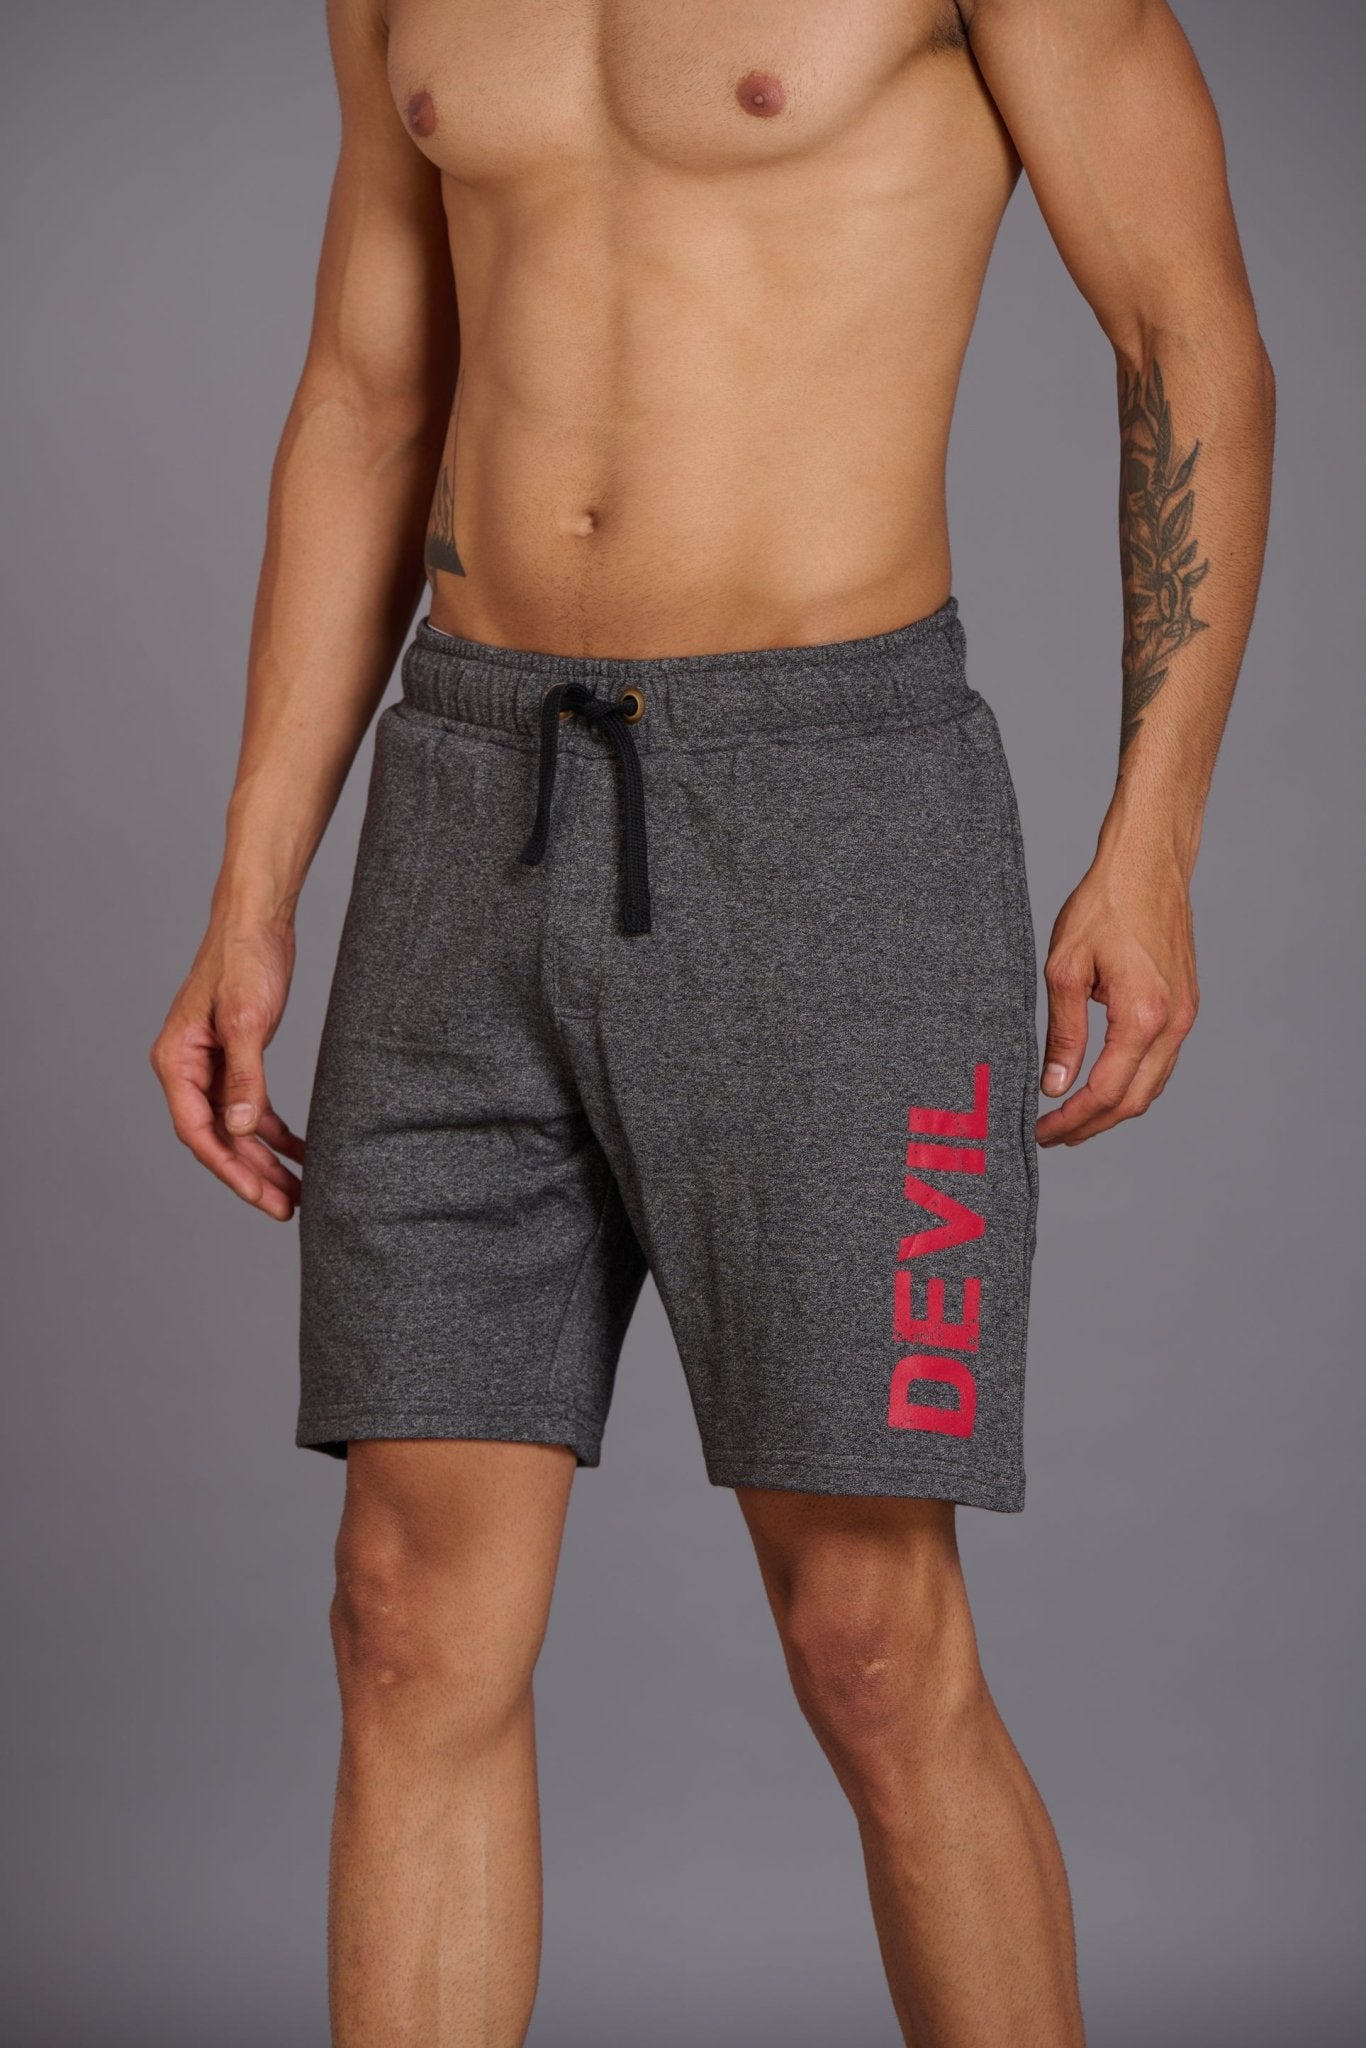 Devil Printed Grey Shorts for Men - Go Devil